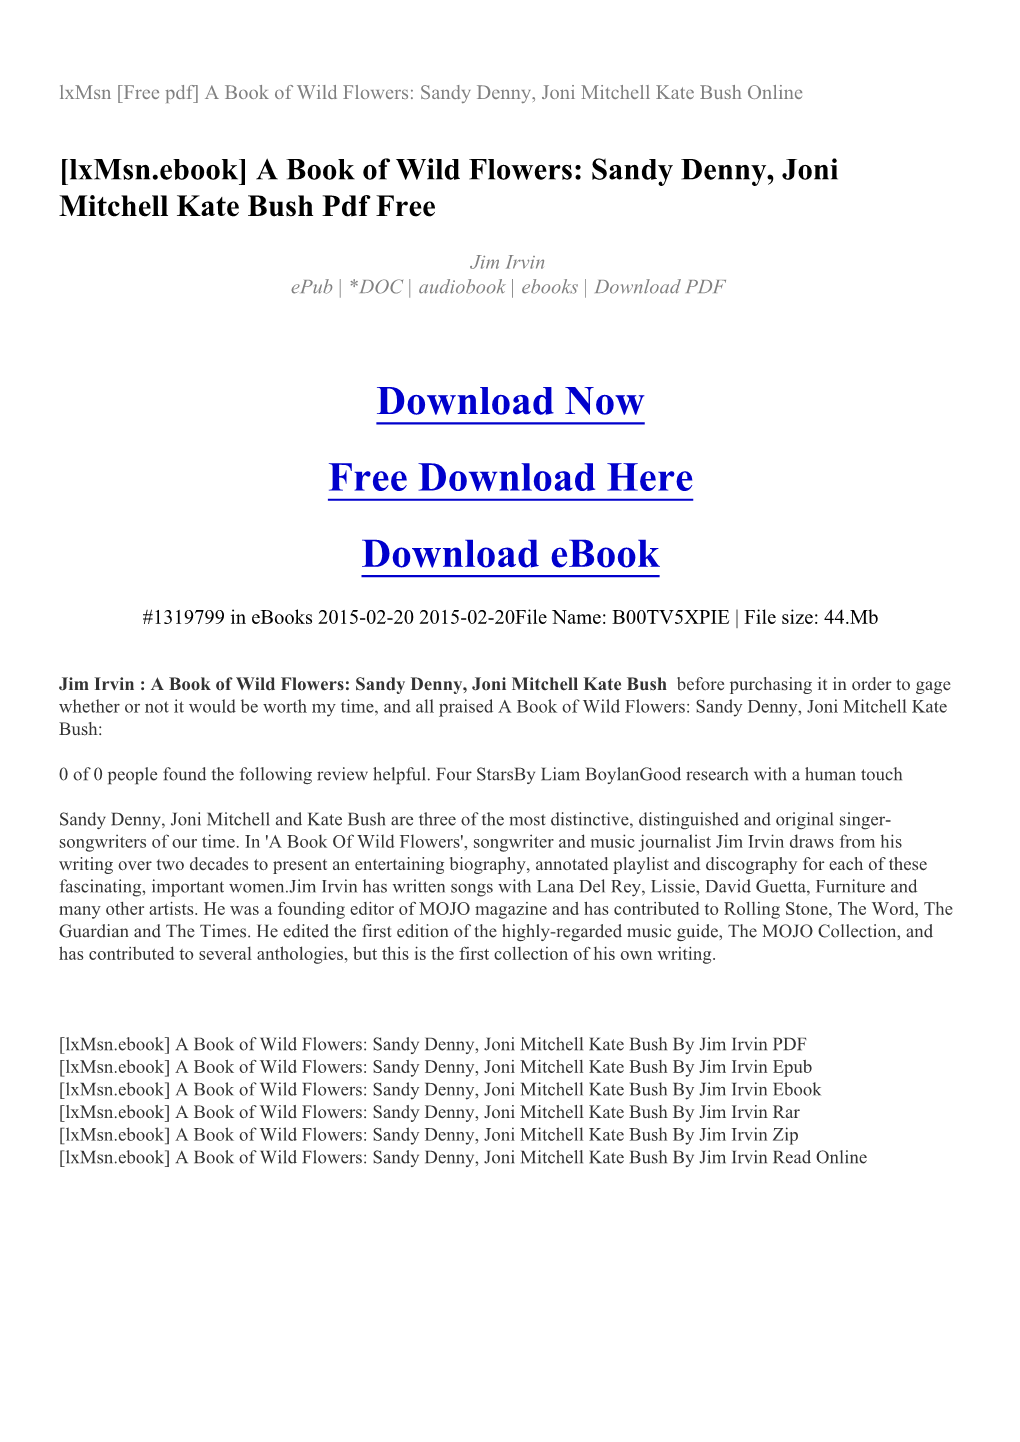 A Book of Wild Flowers: Sandy Denny, Joni Mitchell Kate Bush Online